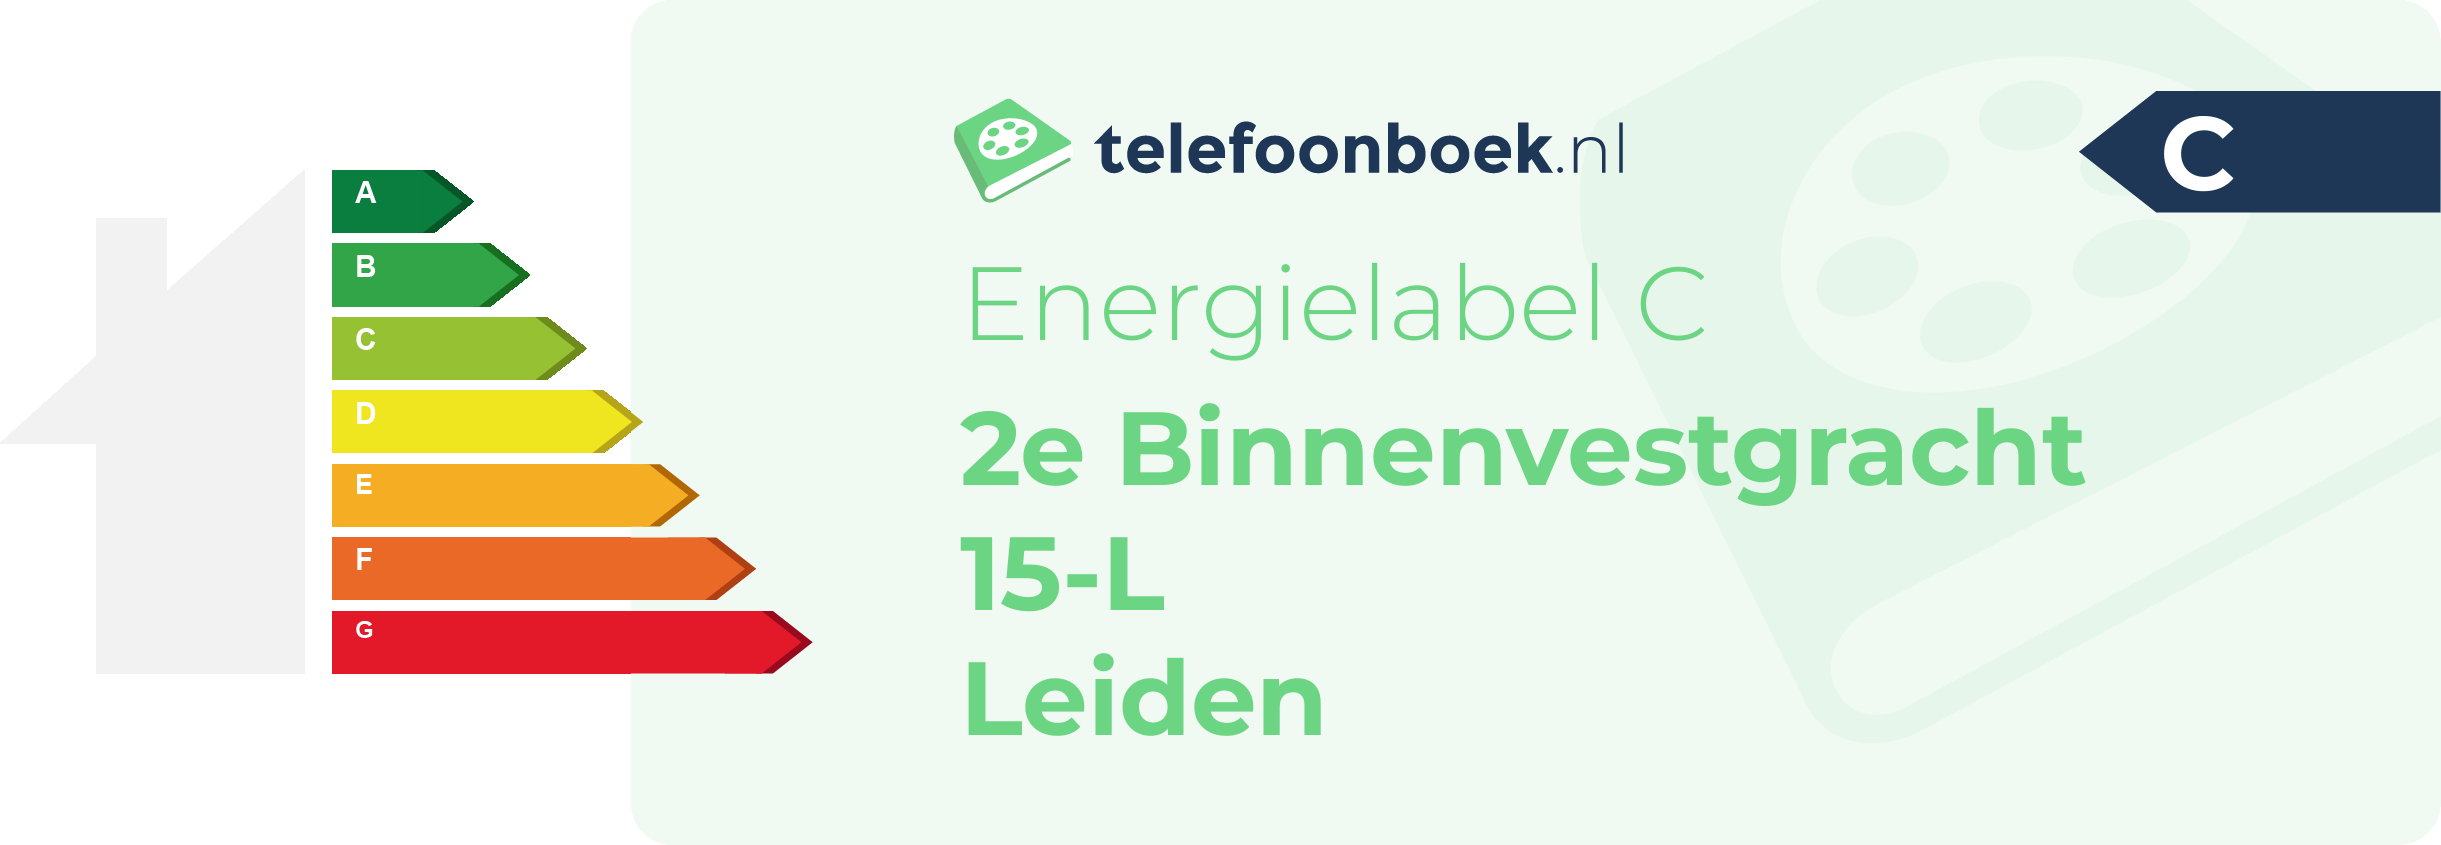 Energielabel 2e Binnenvestgracht 15-L Leiden